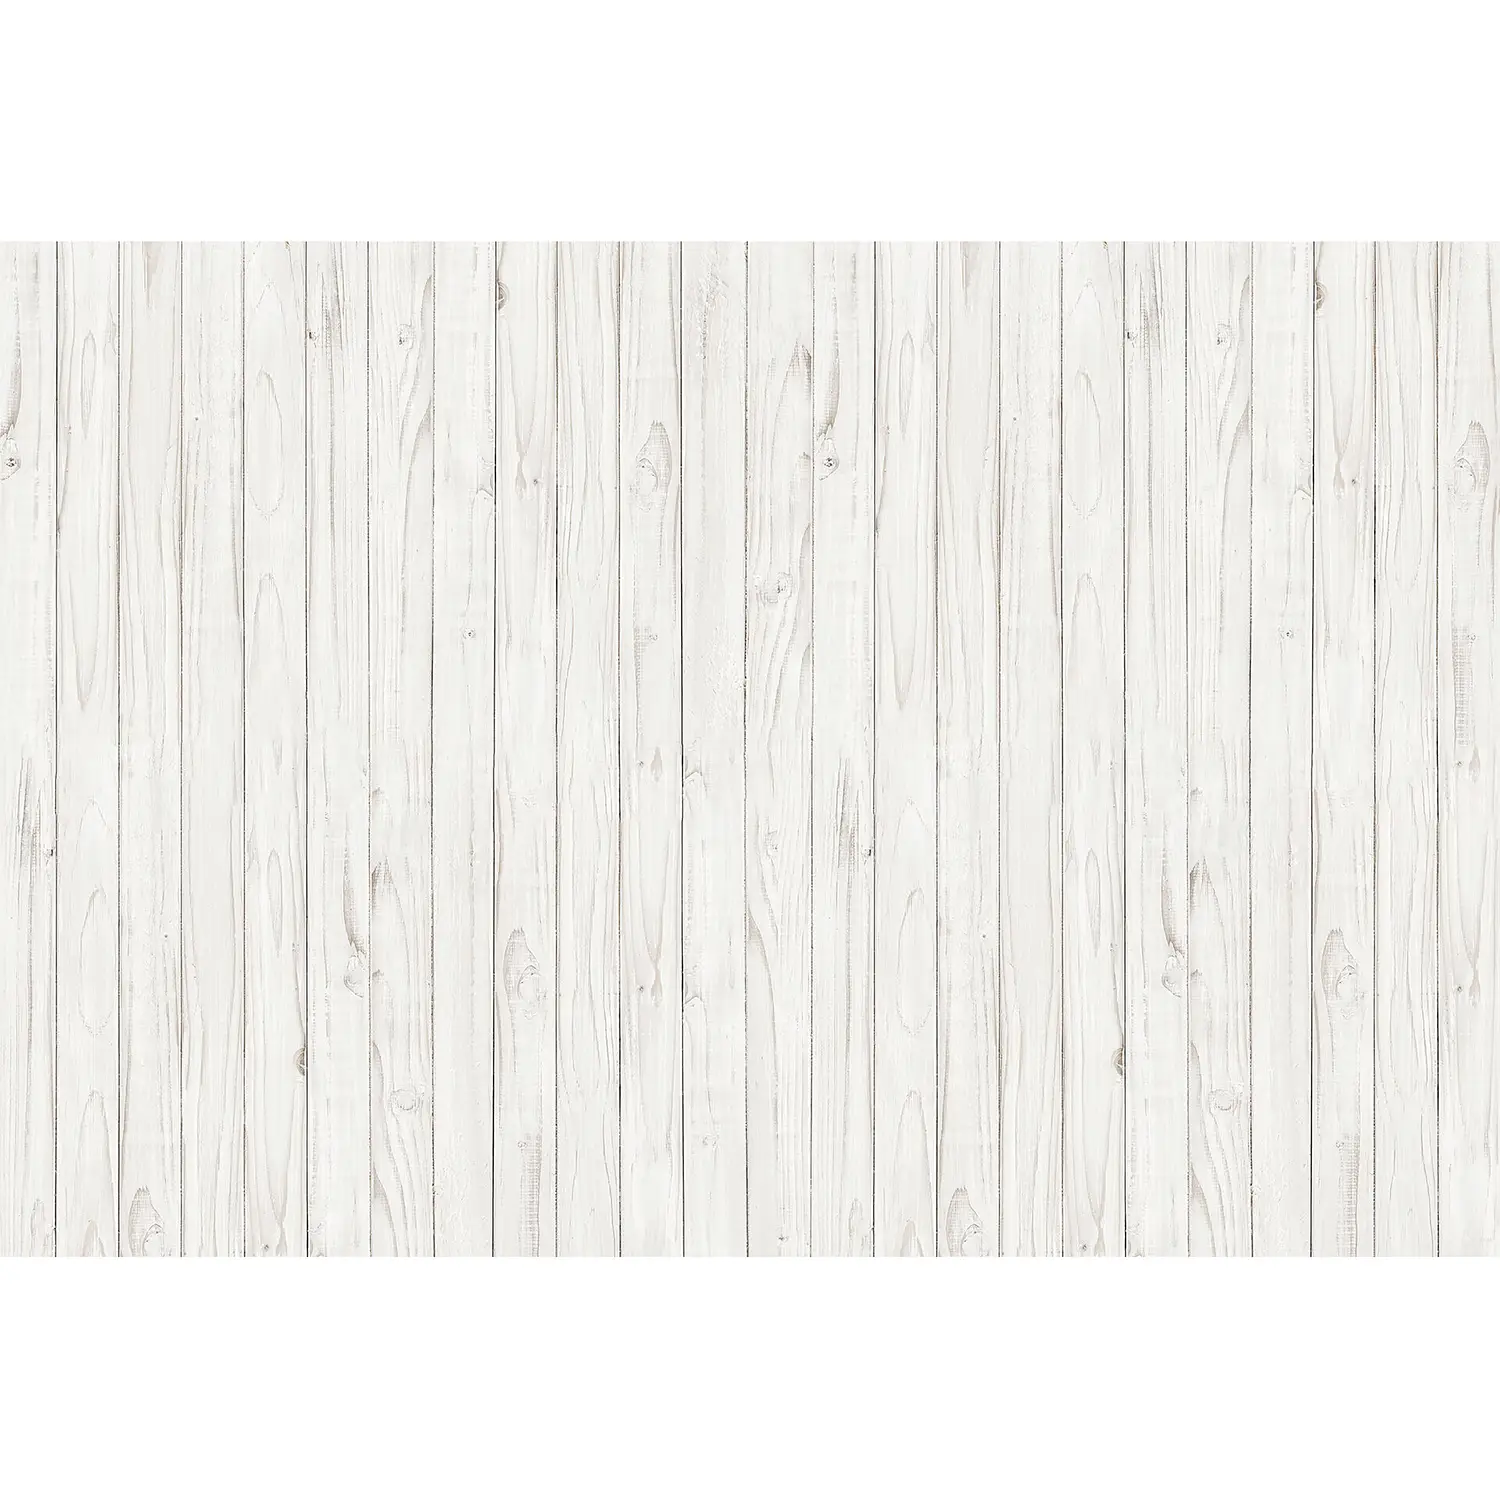 Wooden Wall White Fototapete